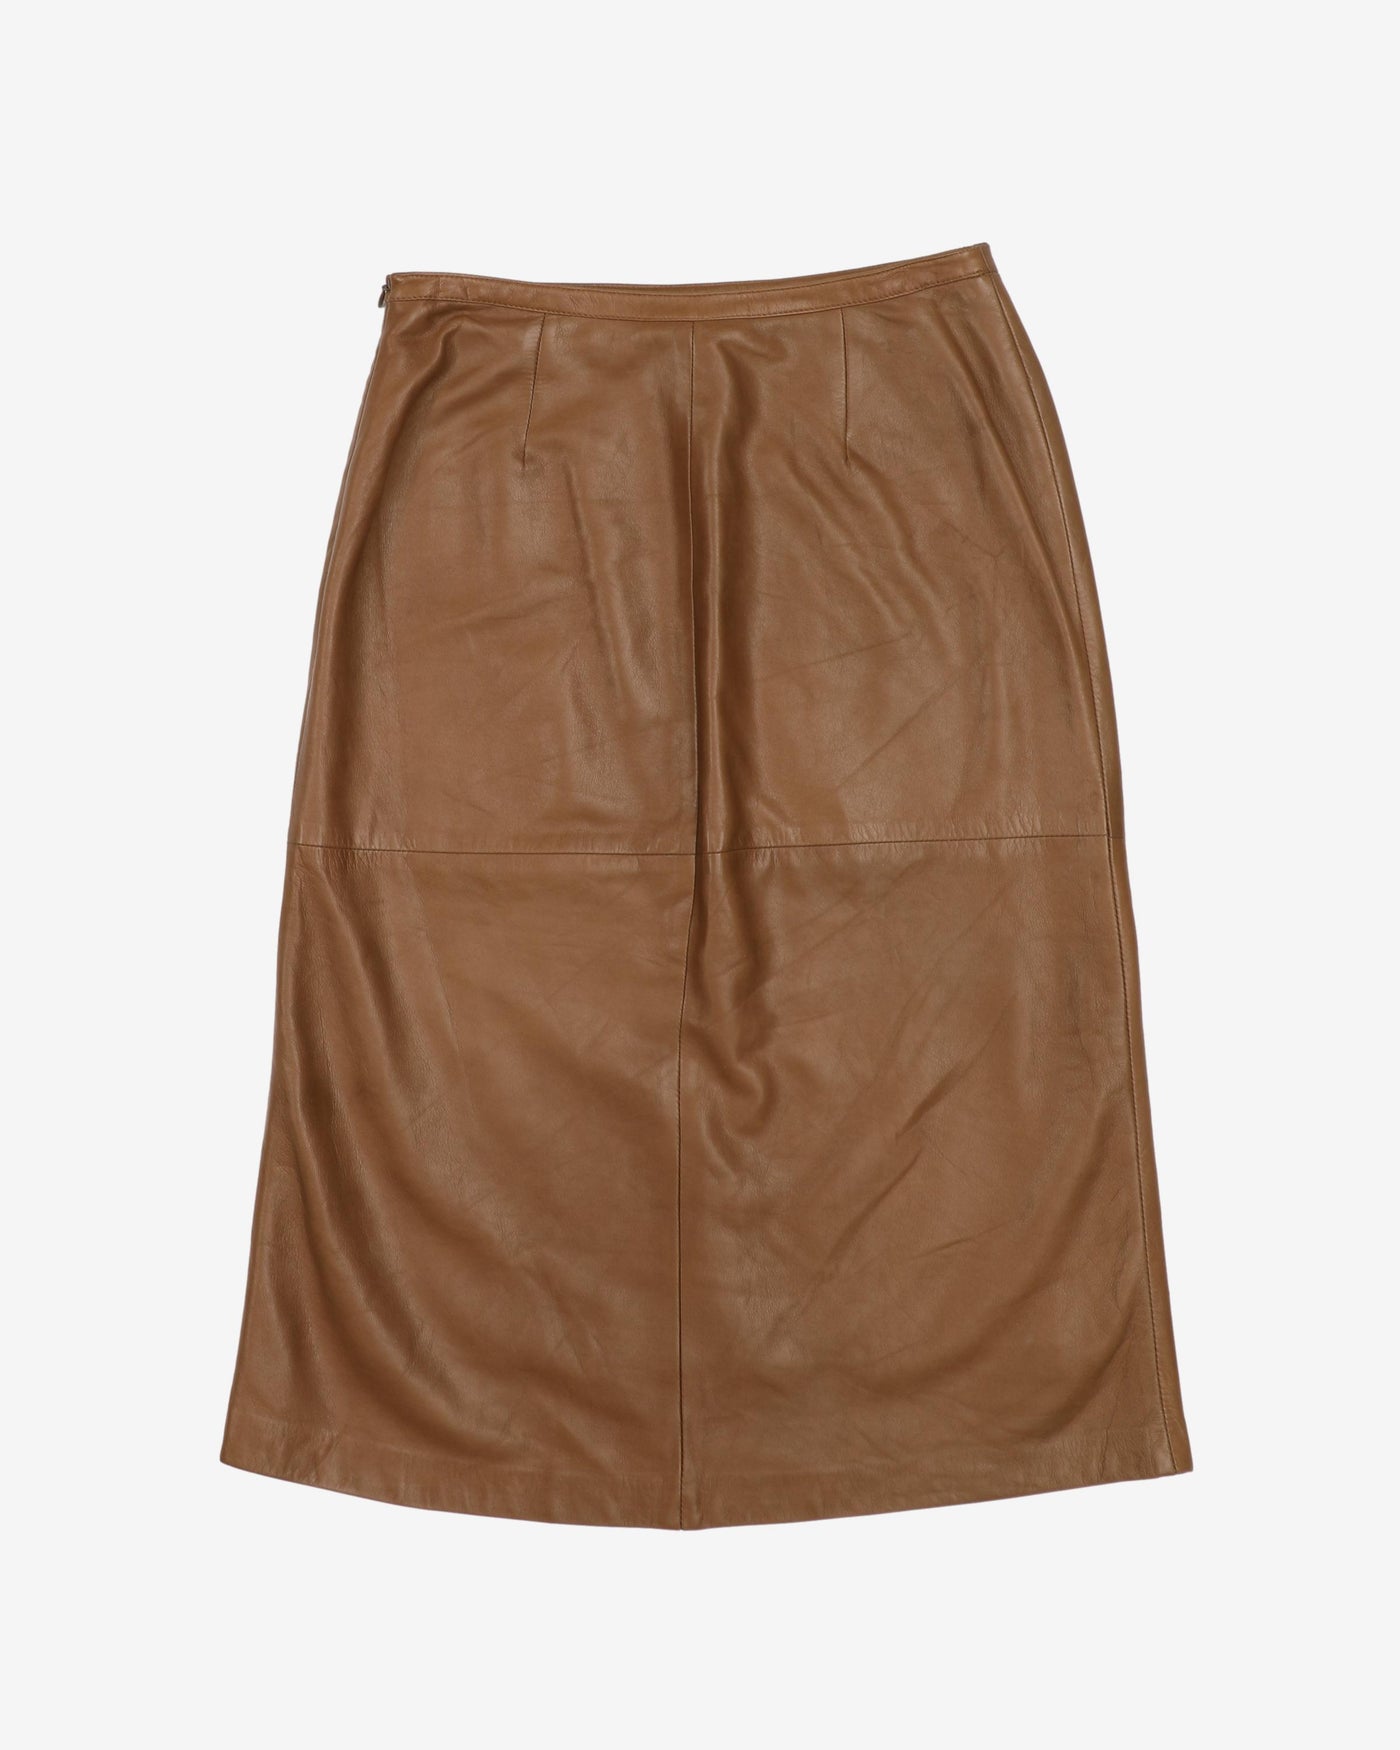 'S MaxMara Brown Leather Pencil Skirt - S